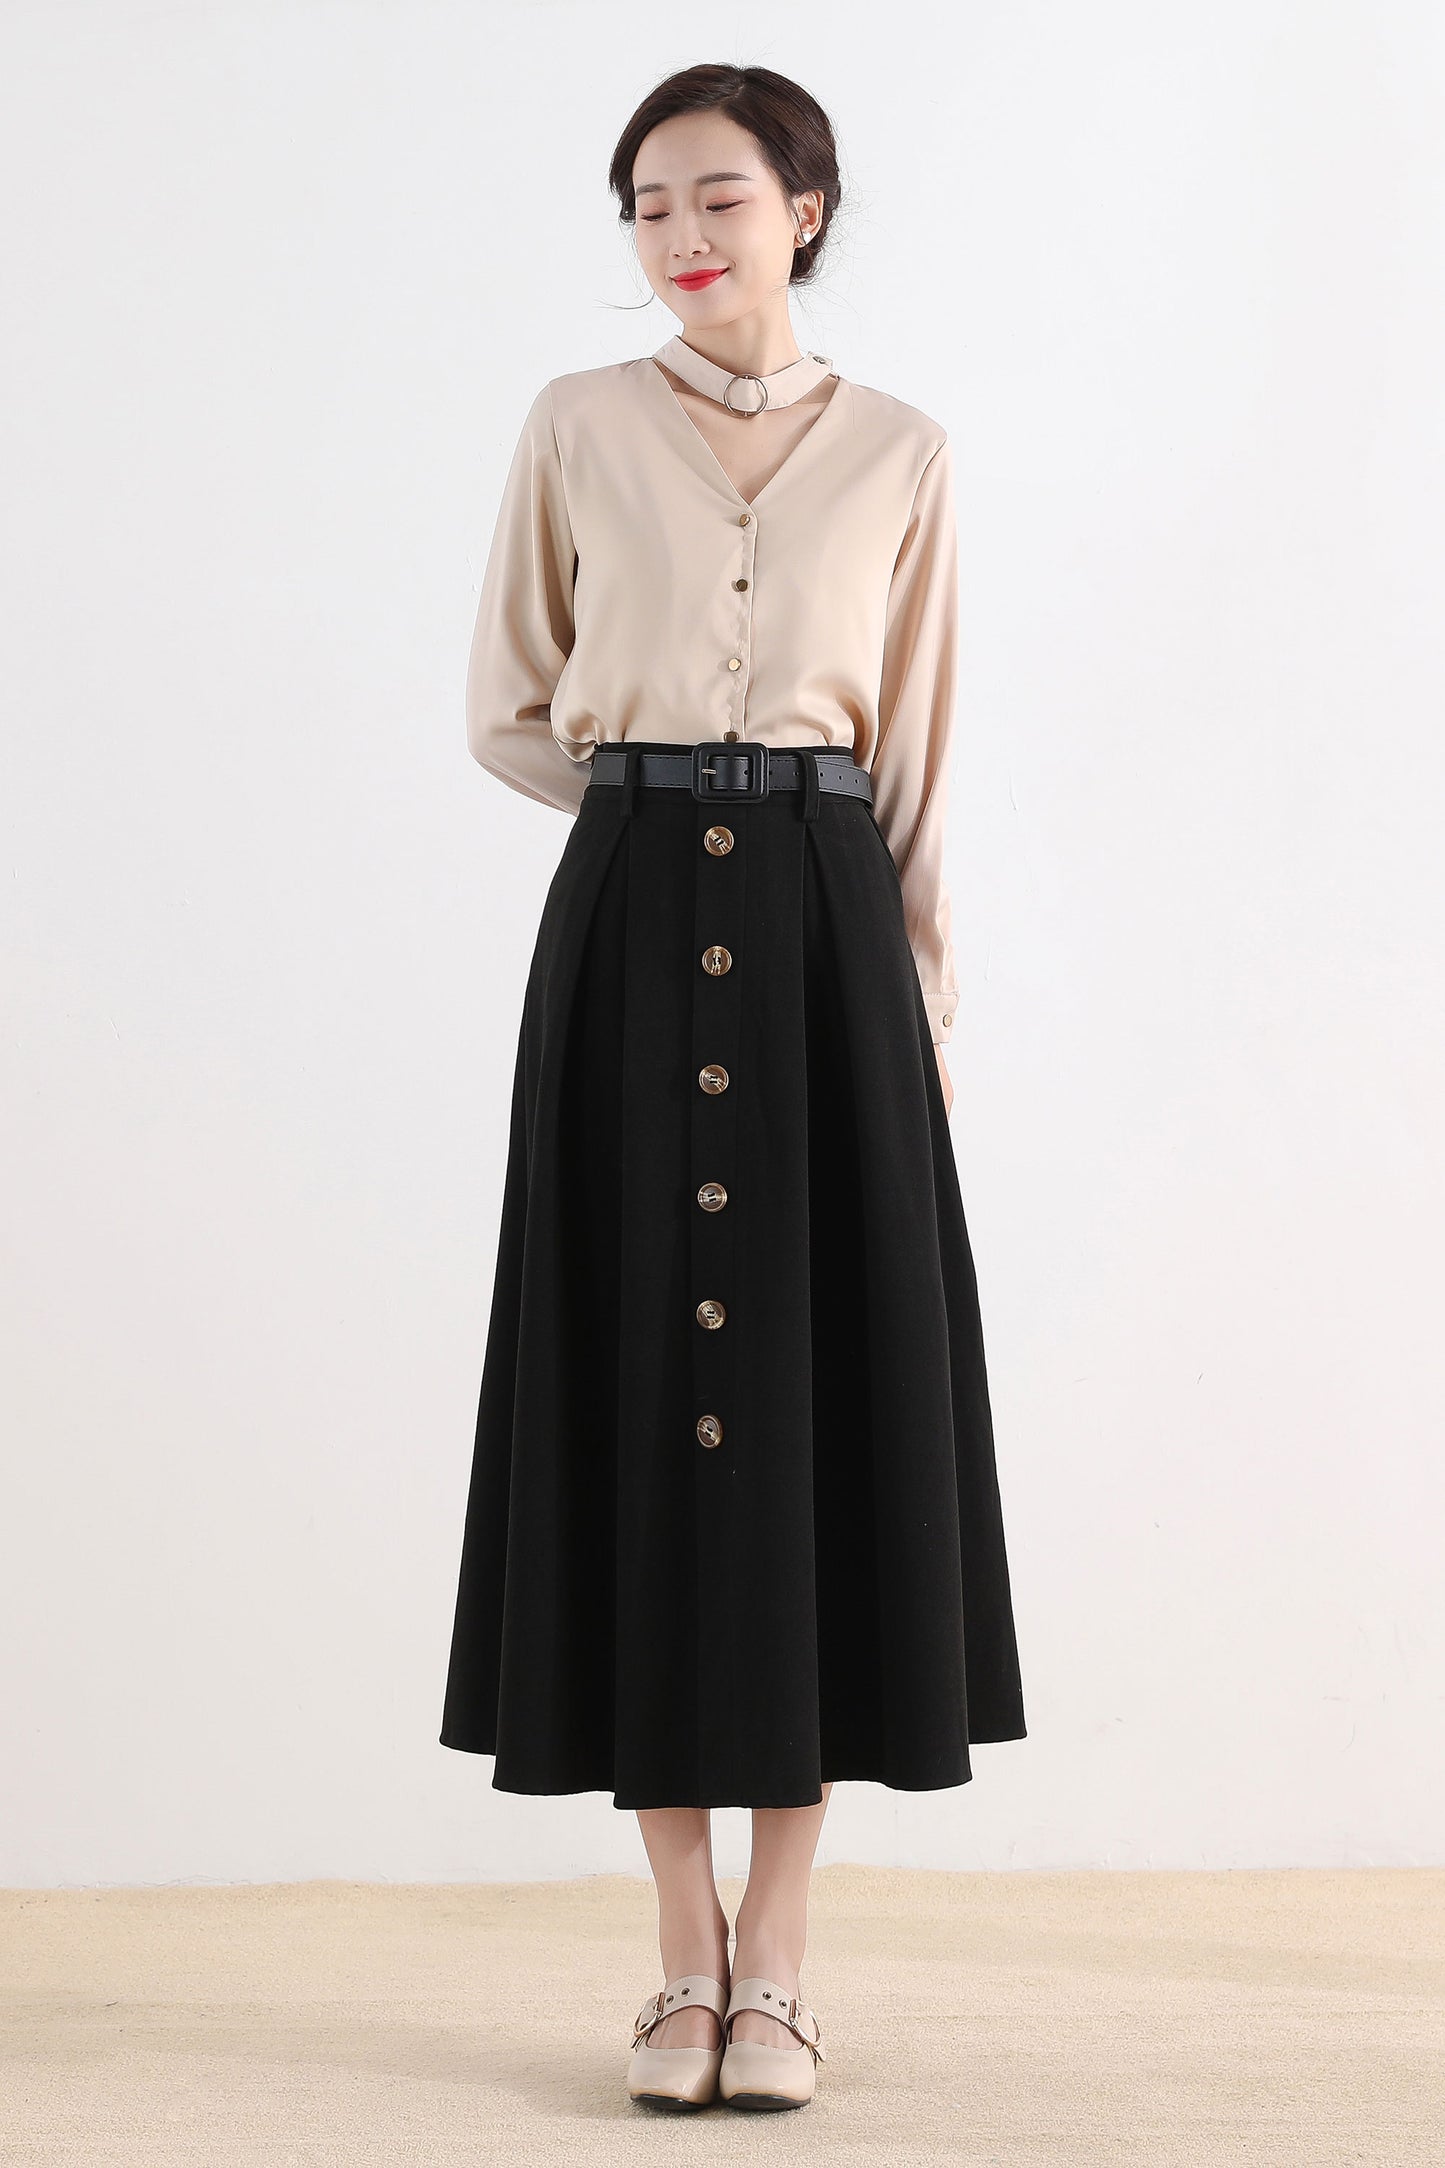 Button front A Line Black Wool Skirt 2516#